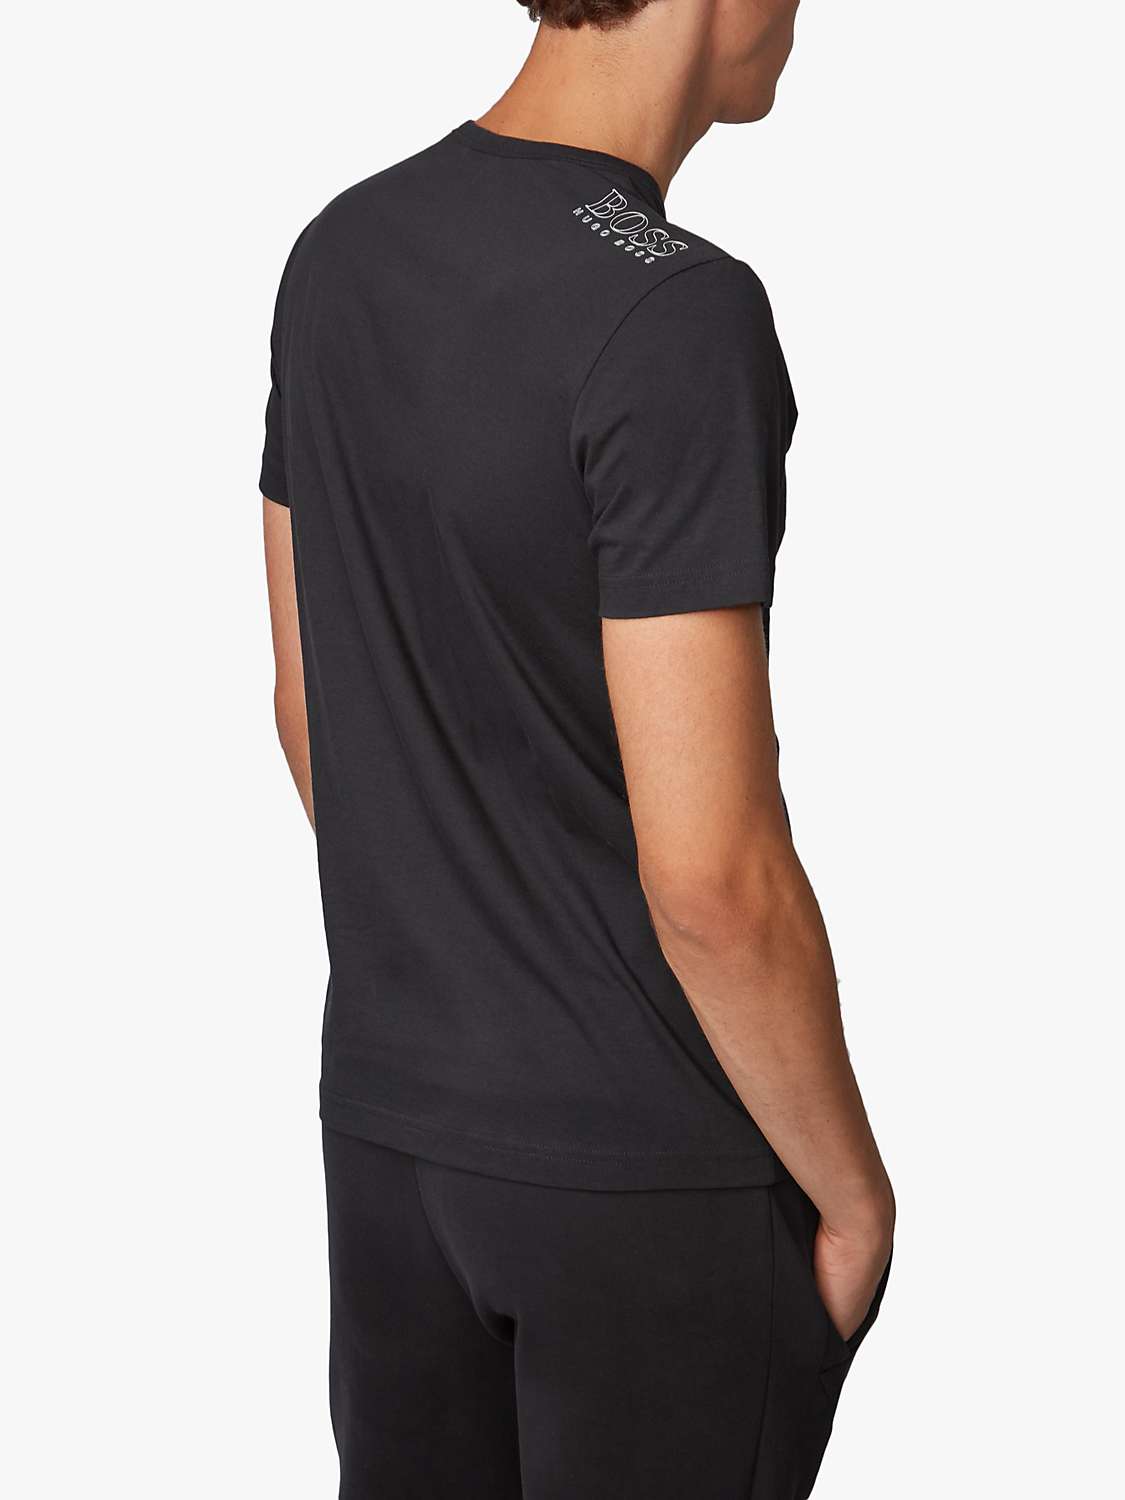 Buy BOSS Short Sleeve Logo T-Shirt Online at johnlewis.com